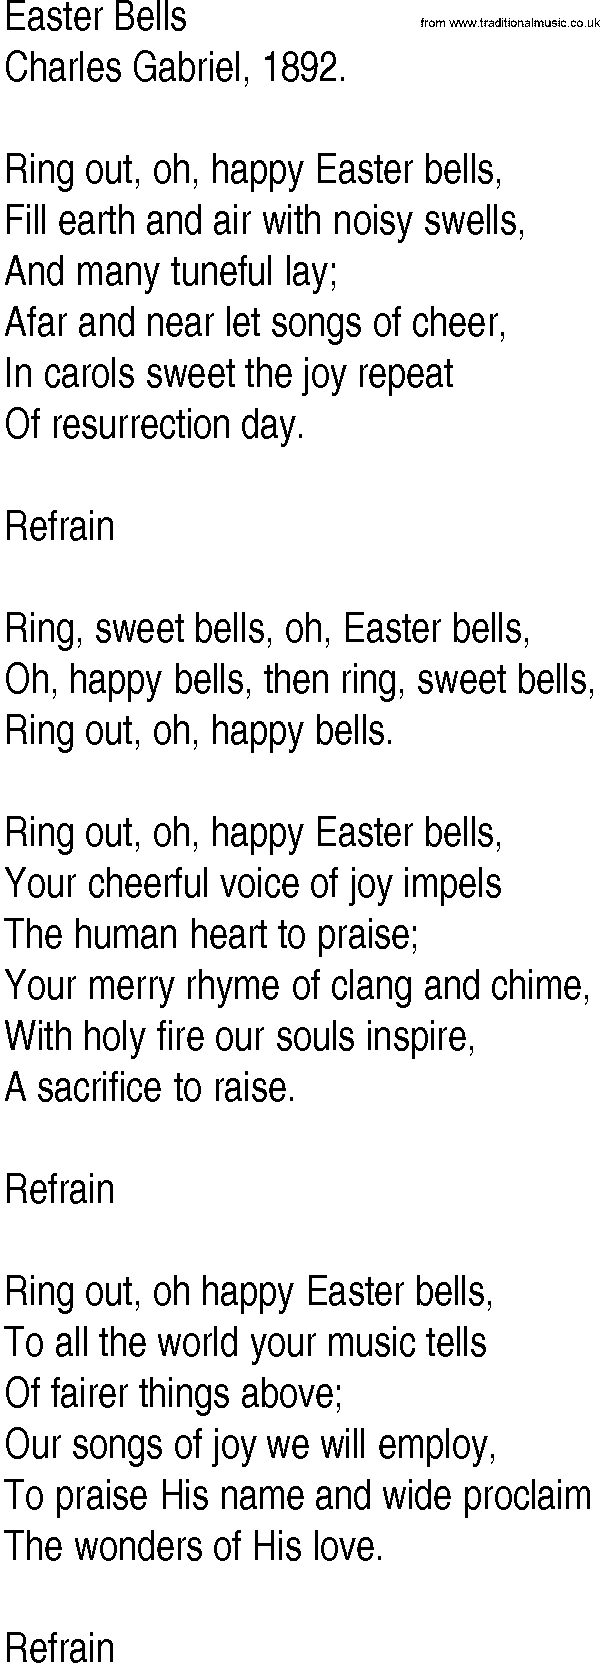 Hymn and Gospel Song: Easter Bells by Charles Gabriel lyrics